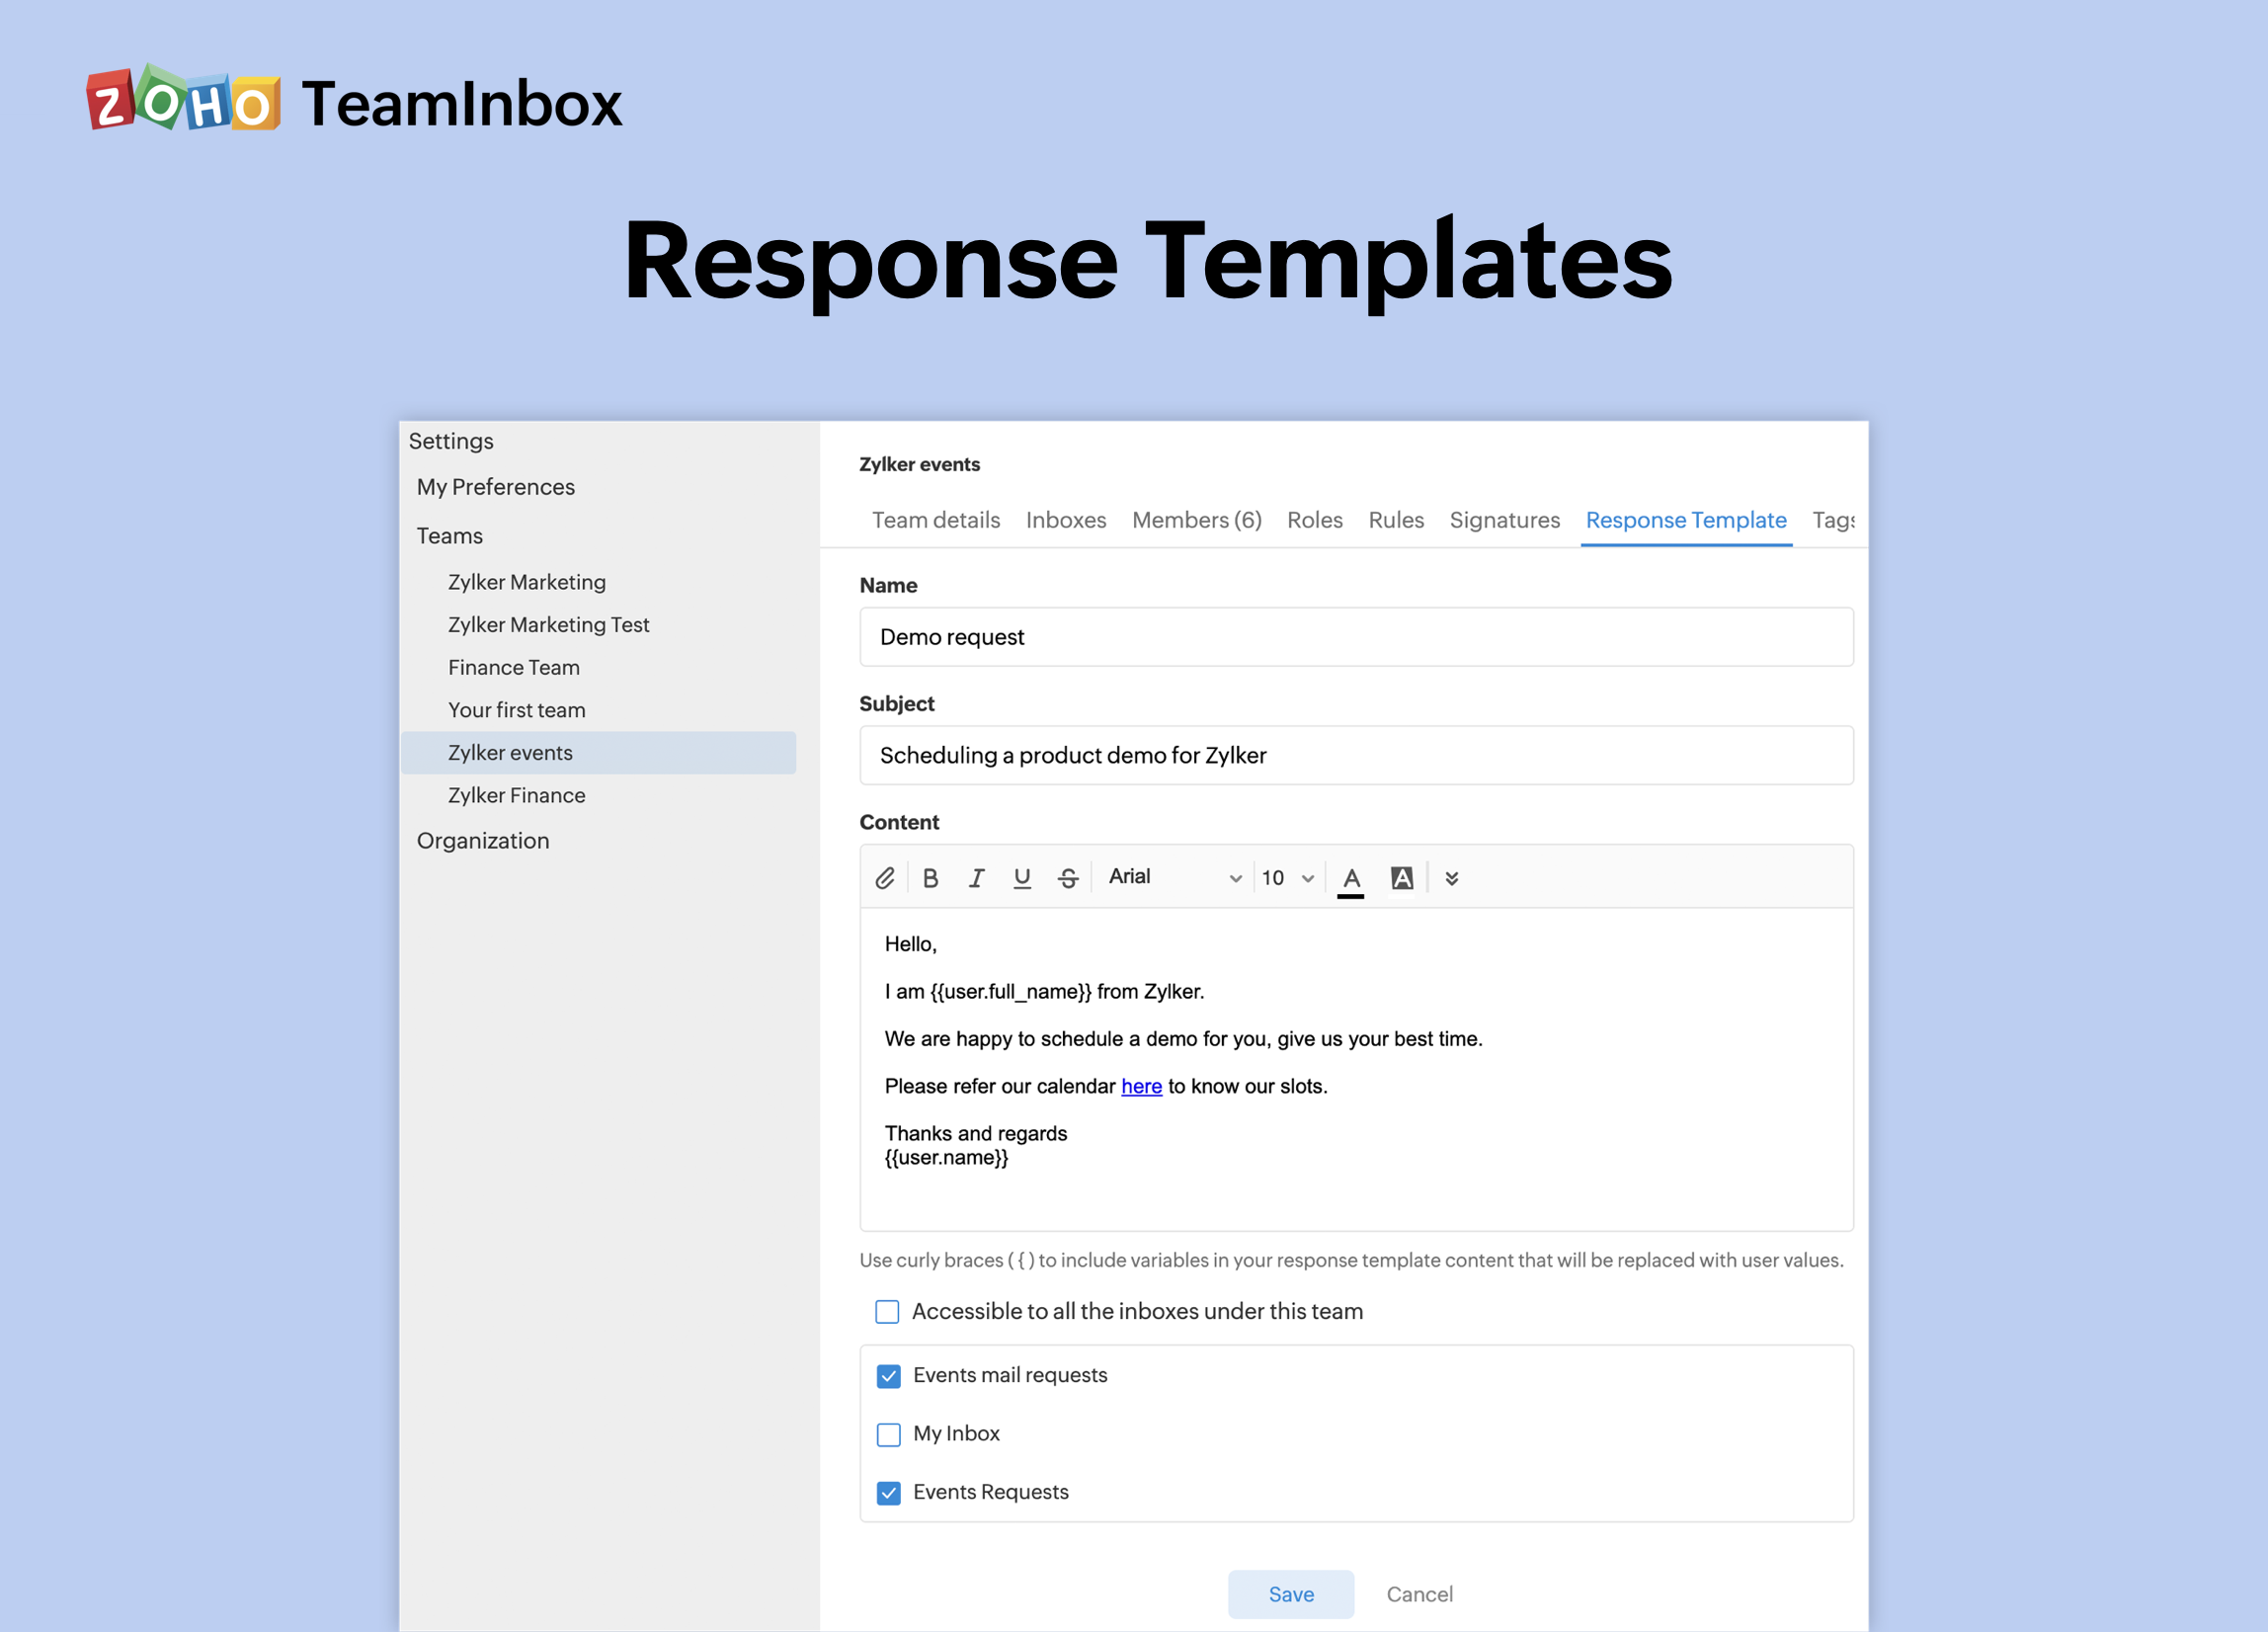 Zoho TeamInbox response templates